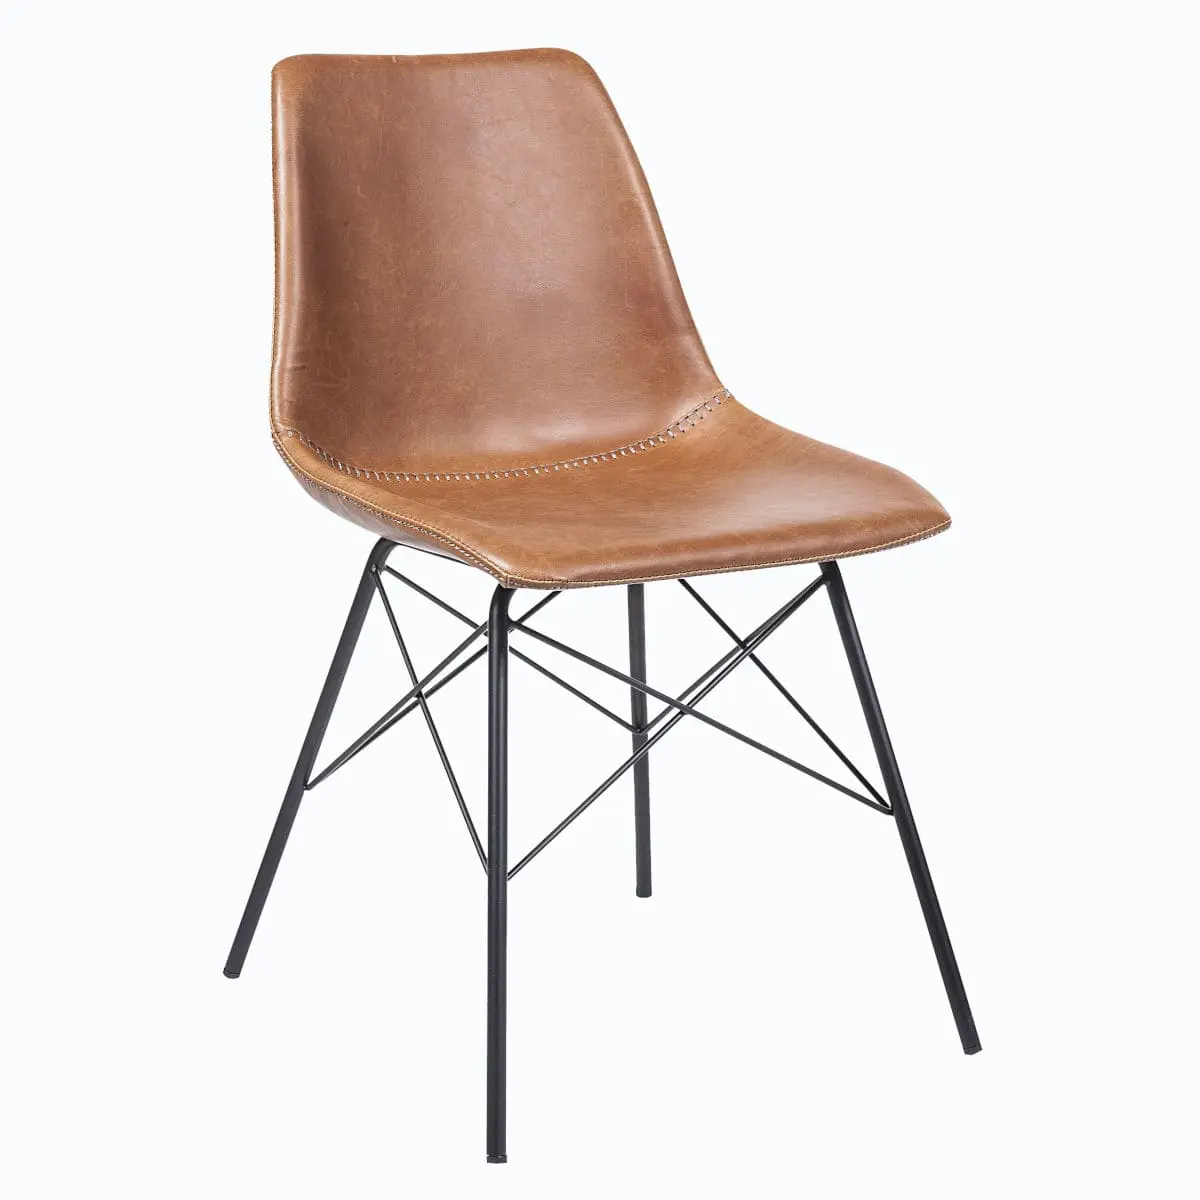 Modern Vintage Design Stuhl braun gepostert Stahlgestell schwarz matt filigran